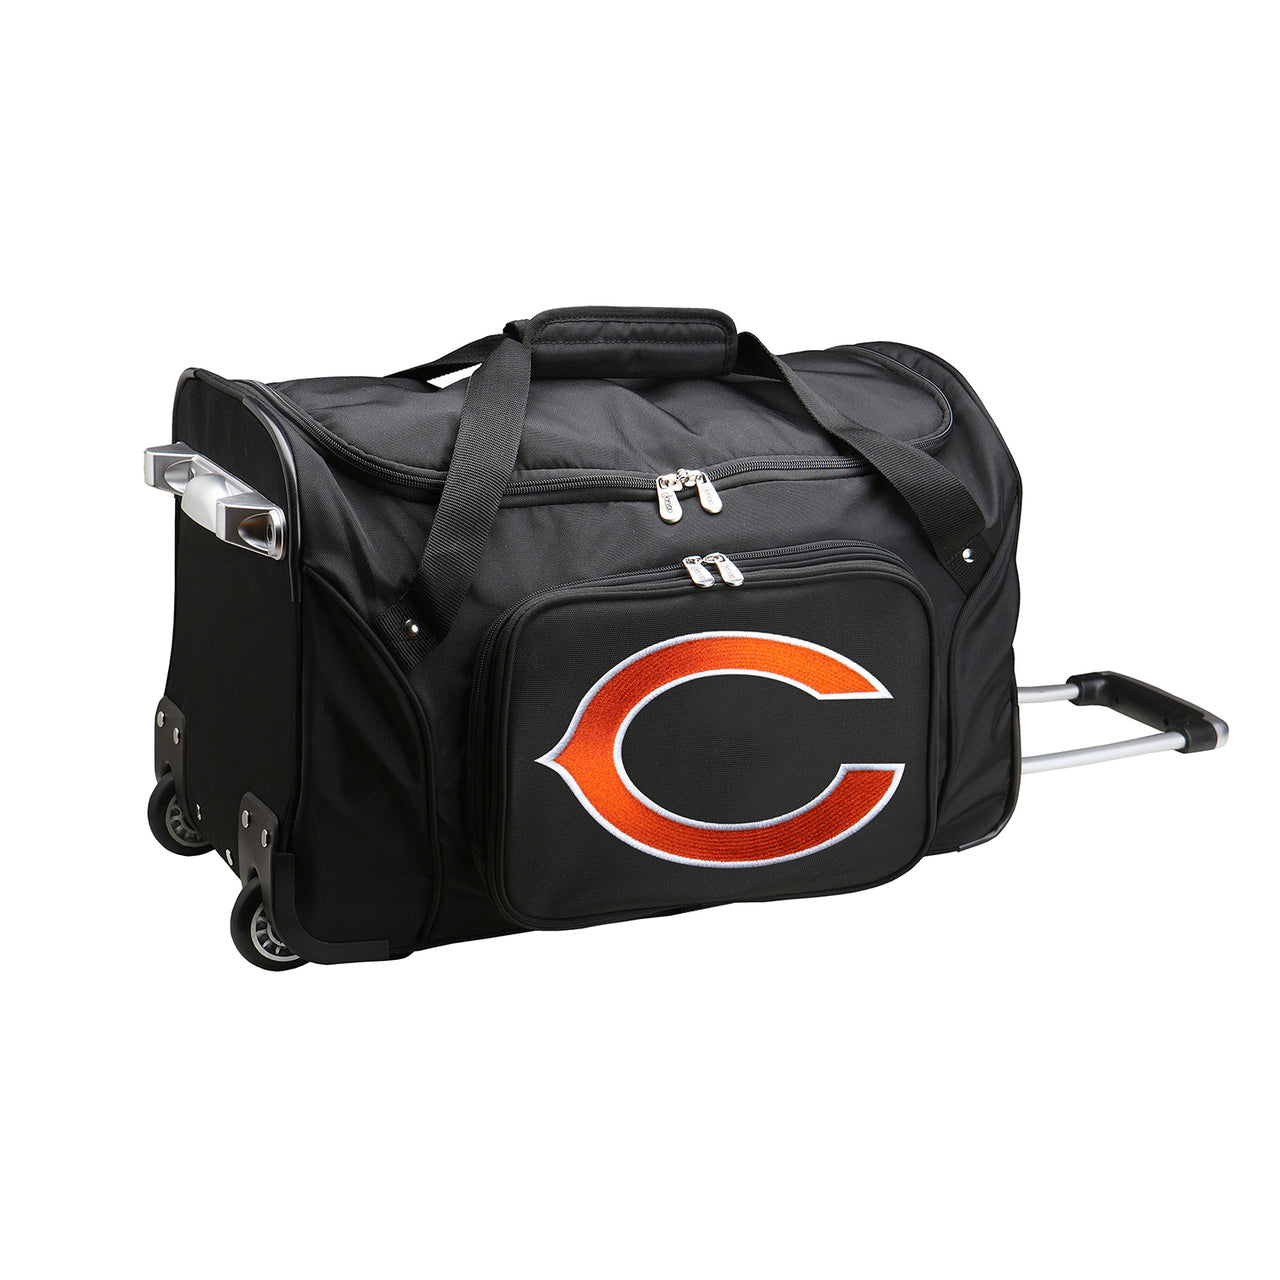 NFL Chicago Bears Luggage | NFL Chicago Bears Wheeled Carry On Luggage